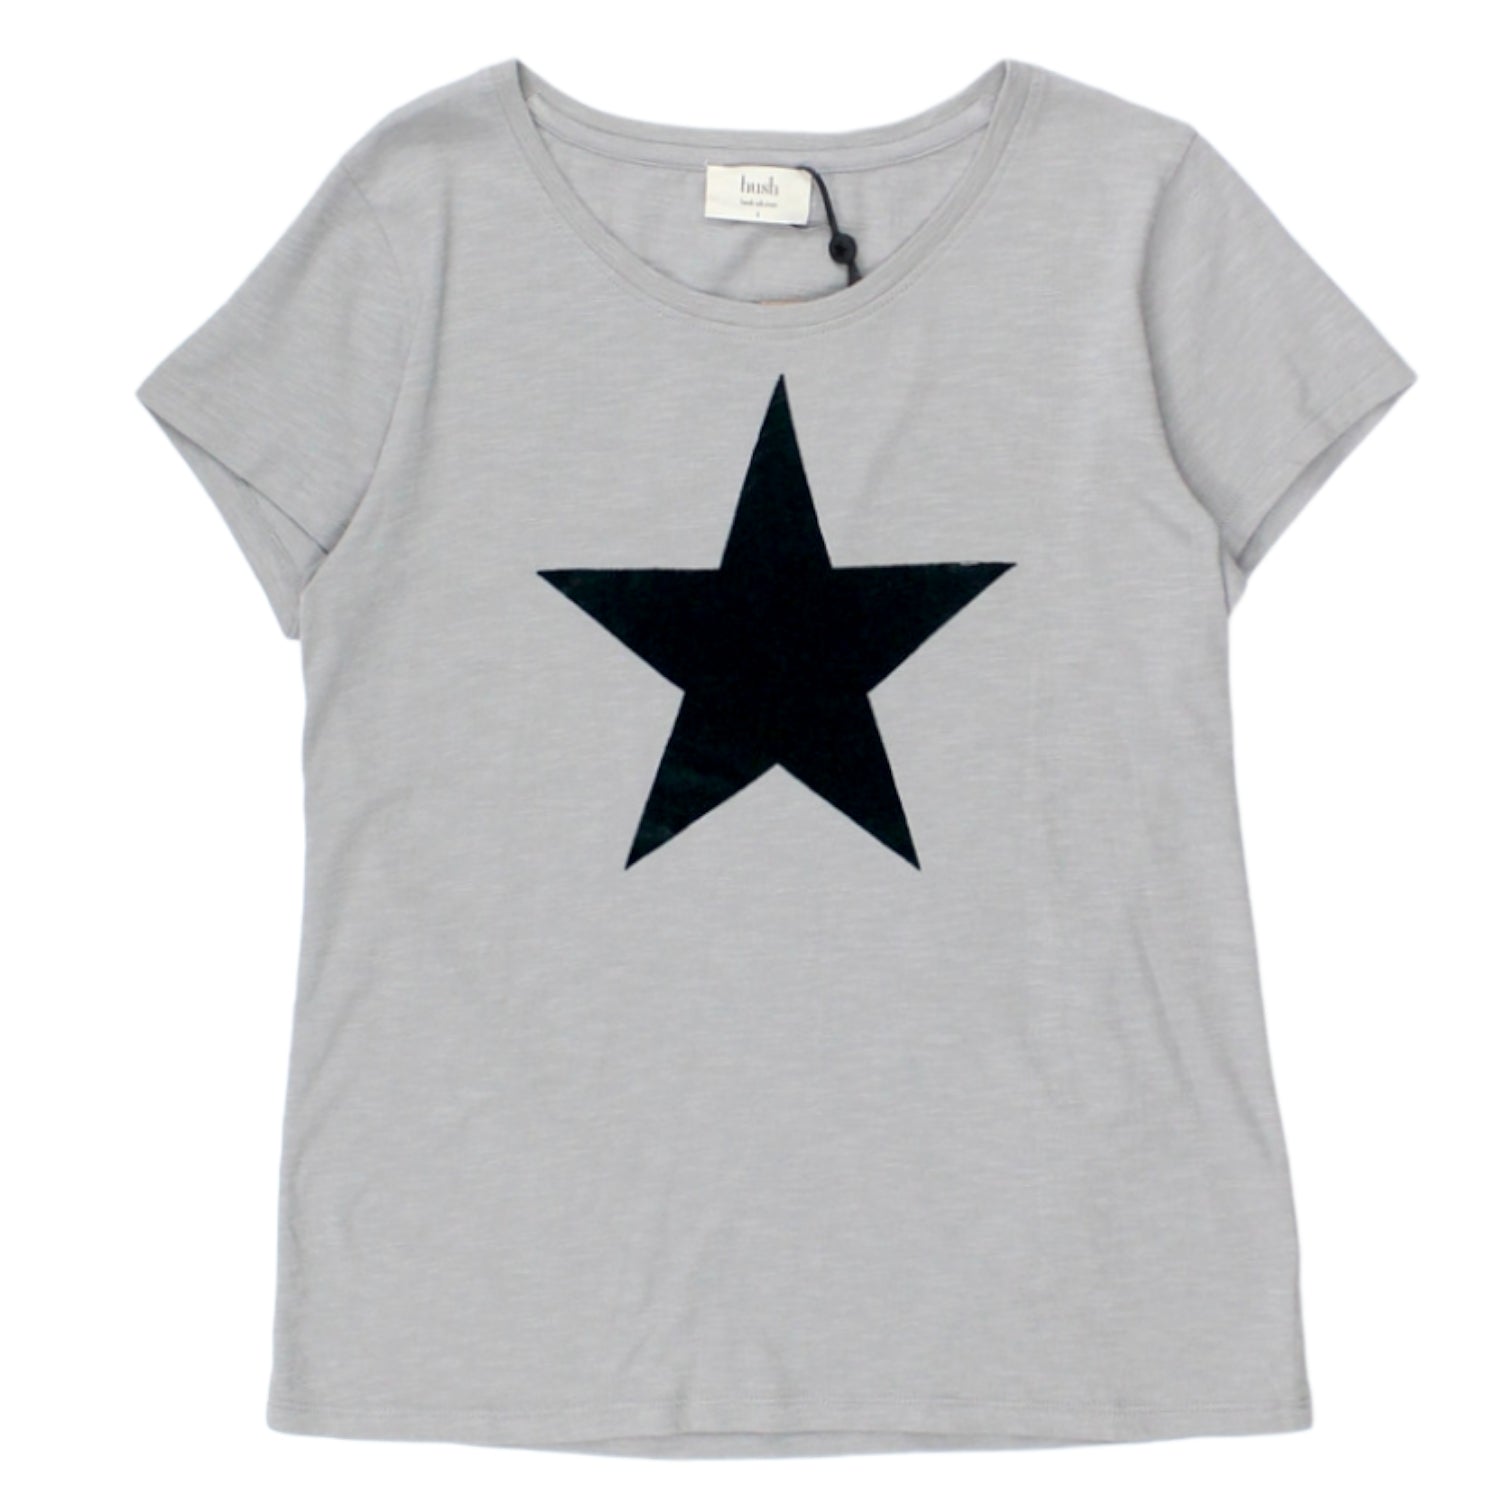 Hush Green Flock Star T-Shirt | Shop from Crisis Online